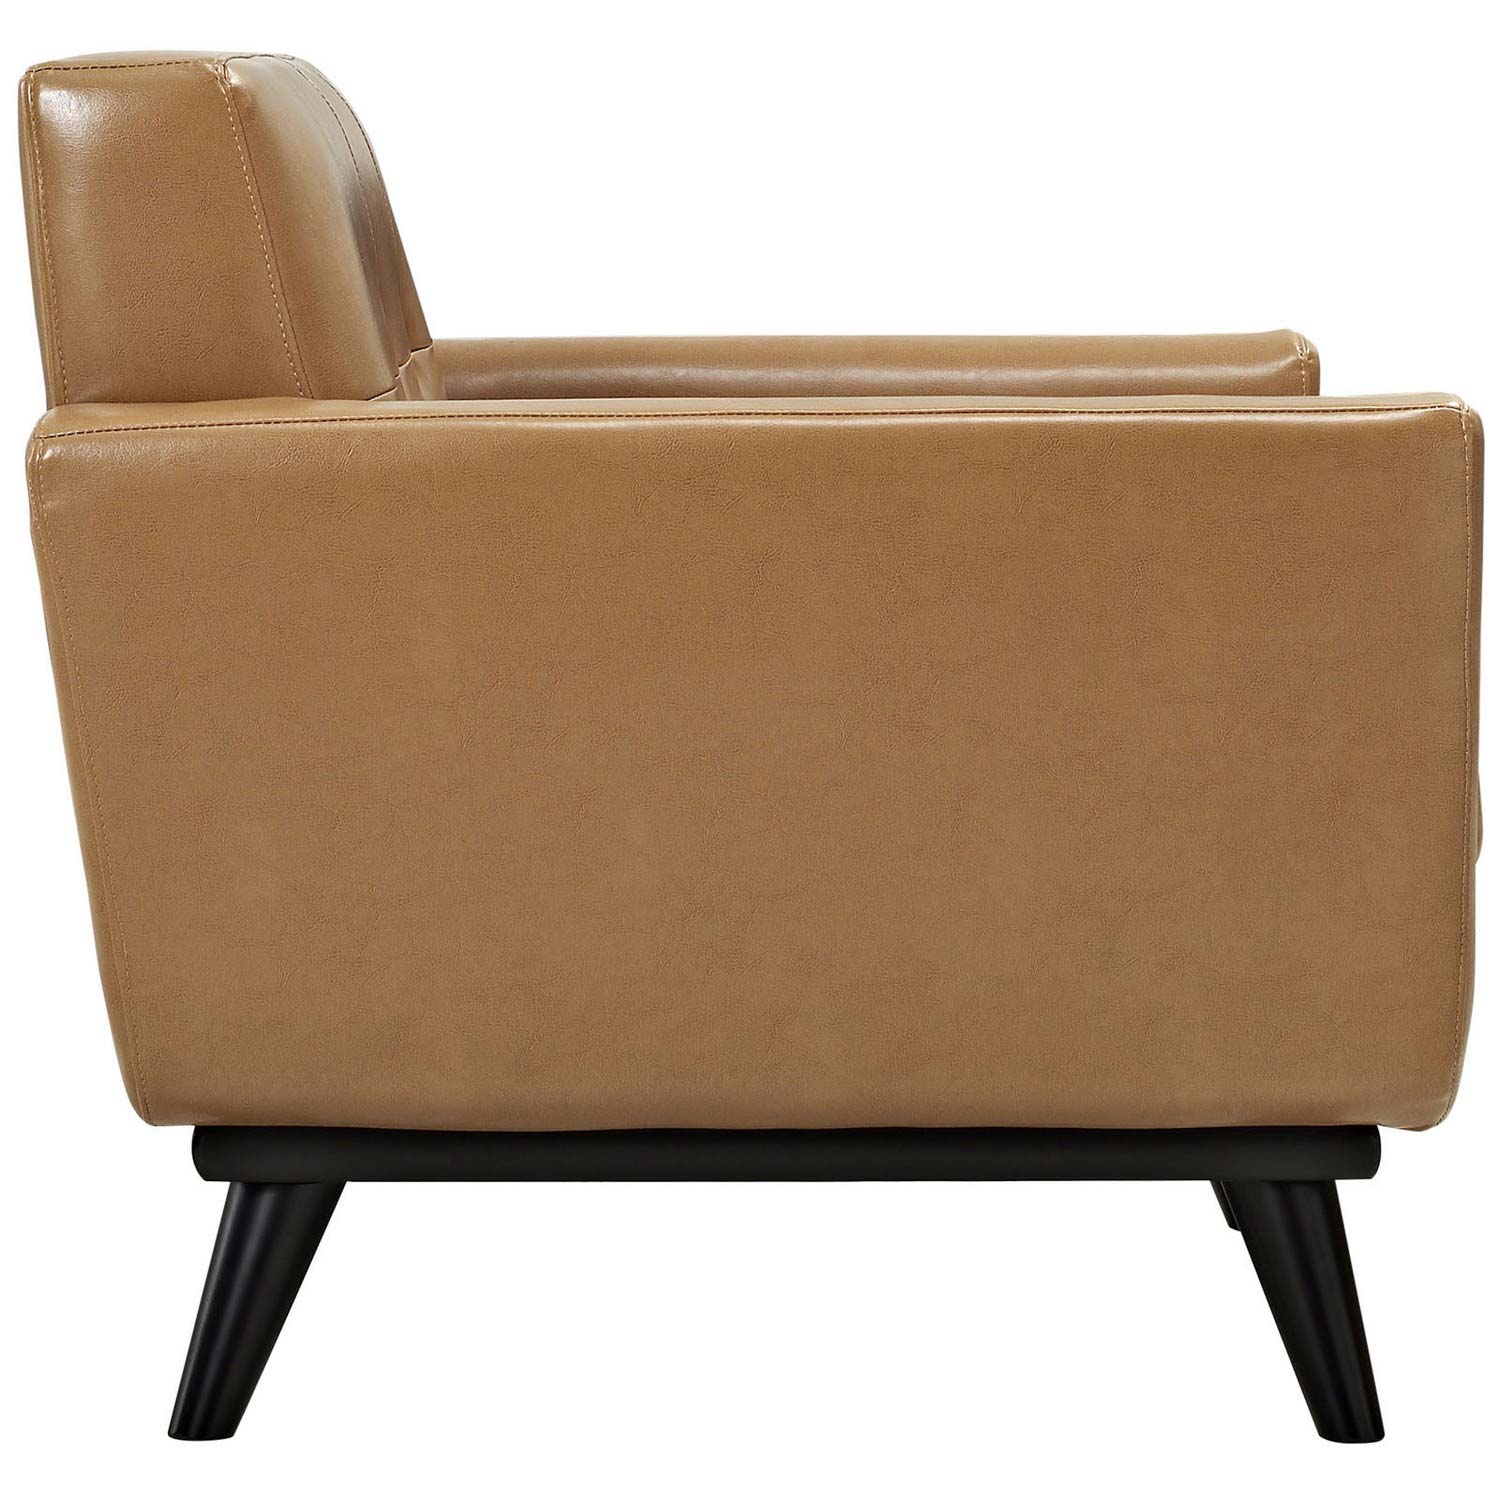 Modway Engage Leather Sofa Set - Tan